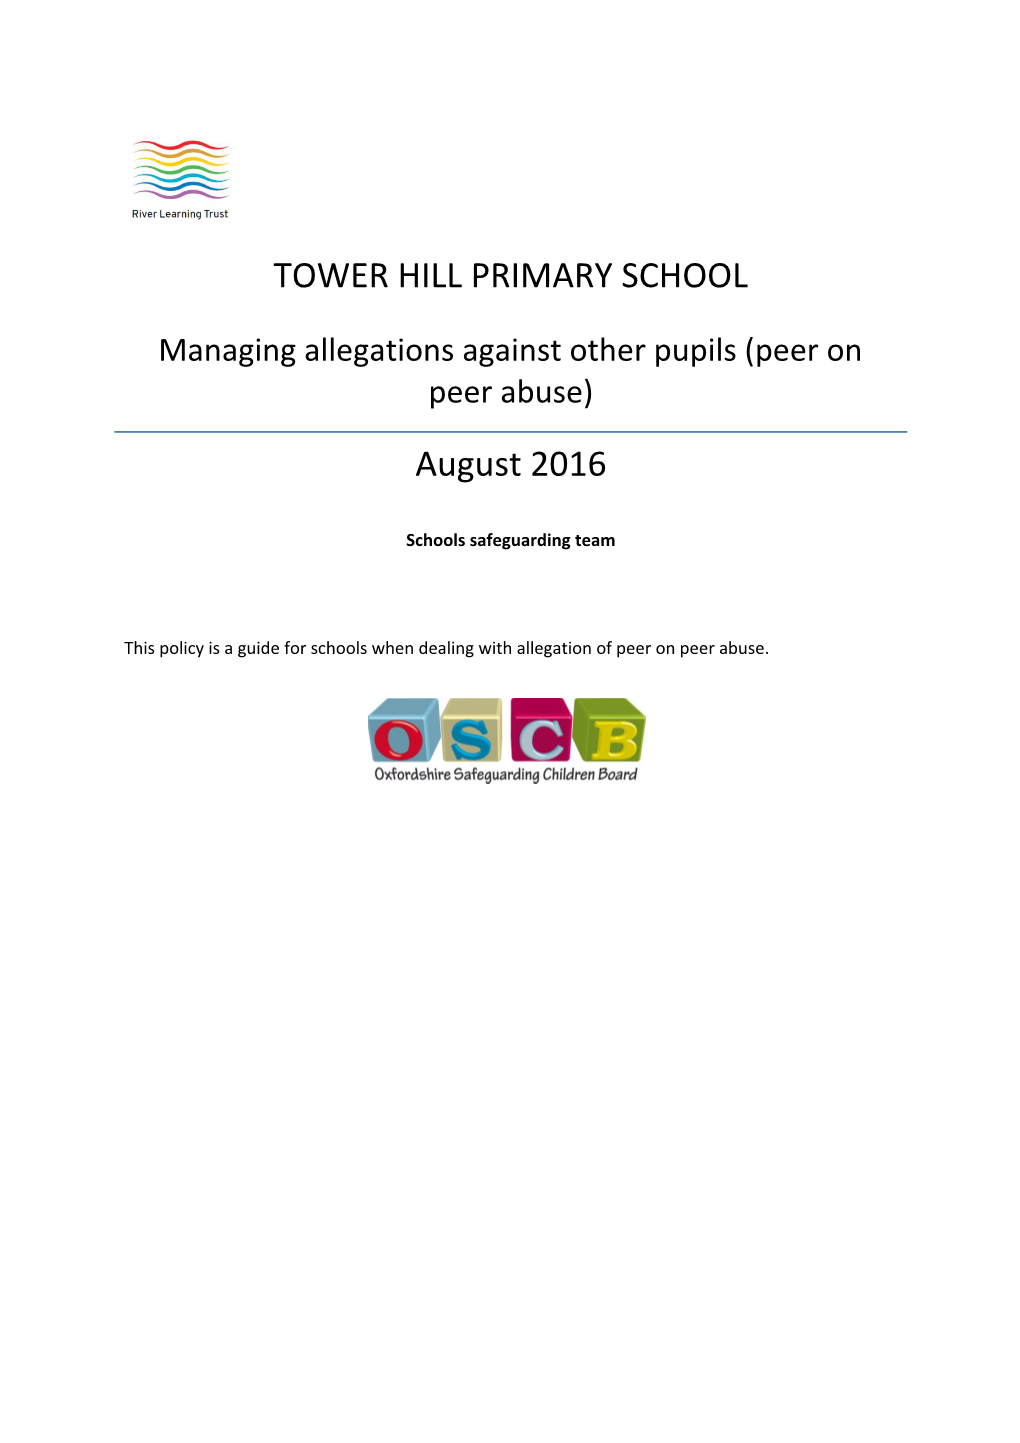 Managing Allegations Against Other Pupils (Peer on Peer Abuse)